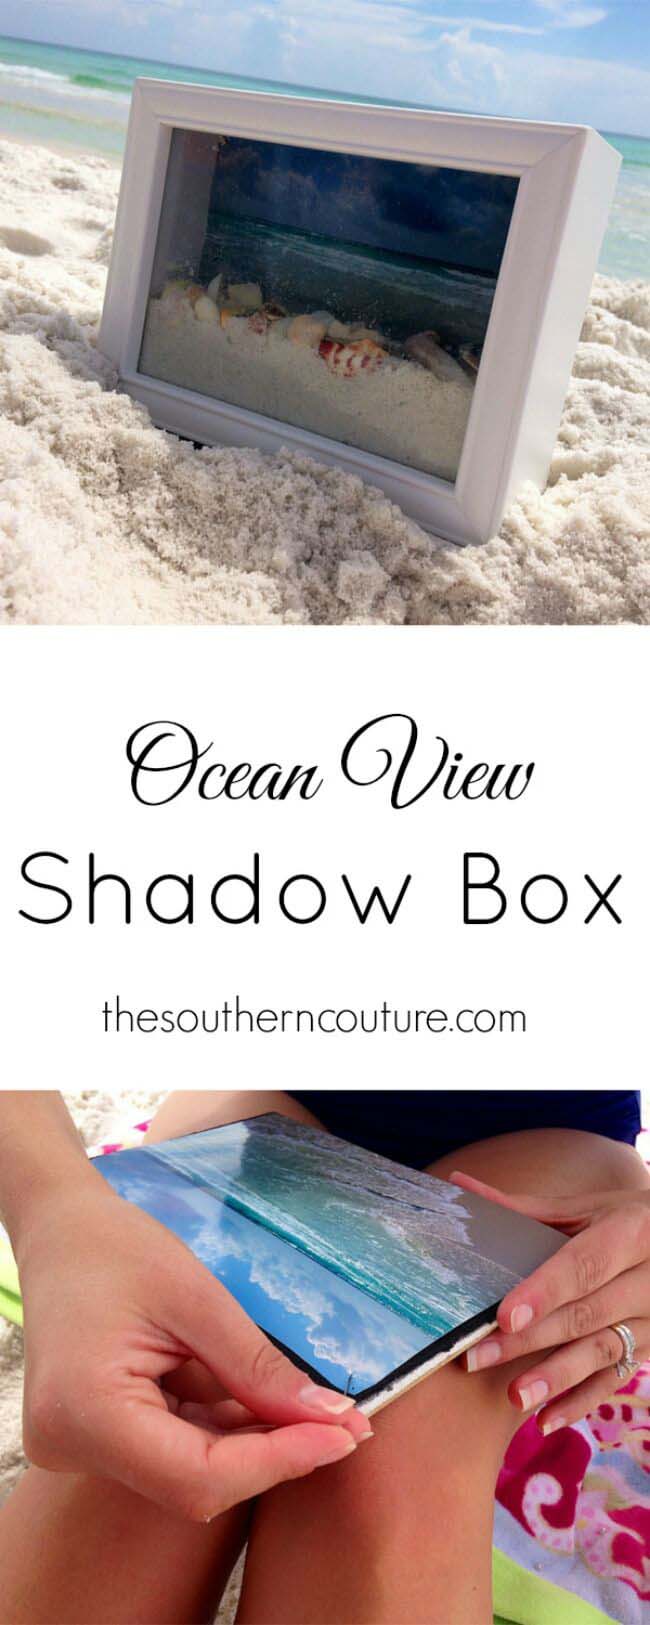 Ocean View Shadow Box #diy #seashell #decor #decorhomeideas